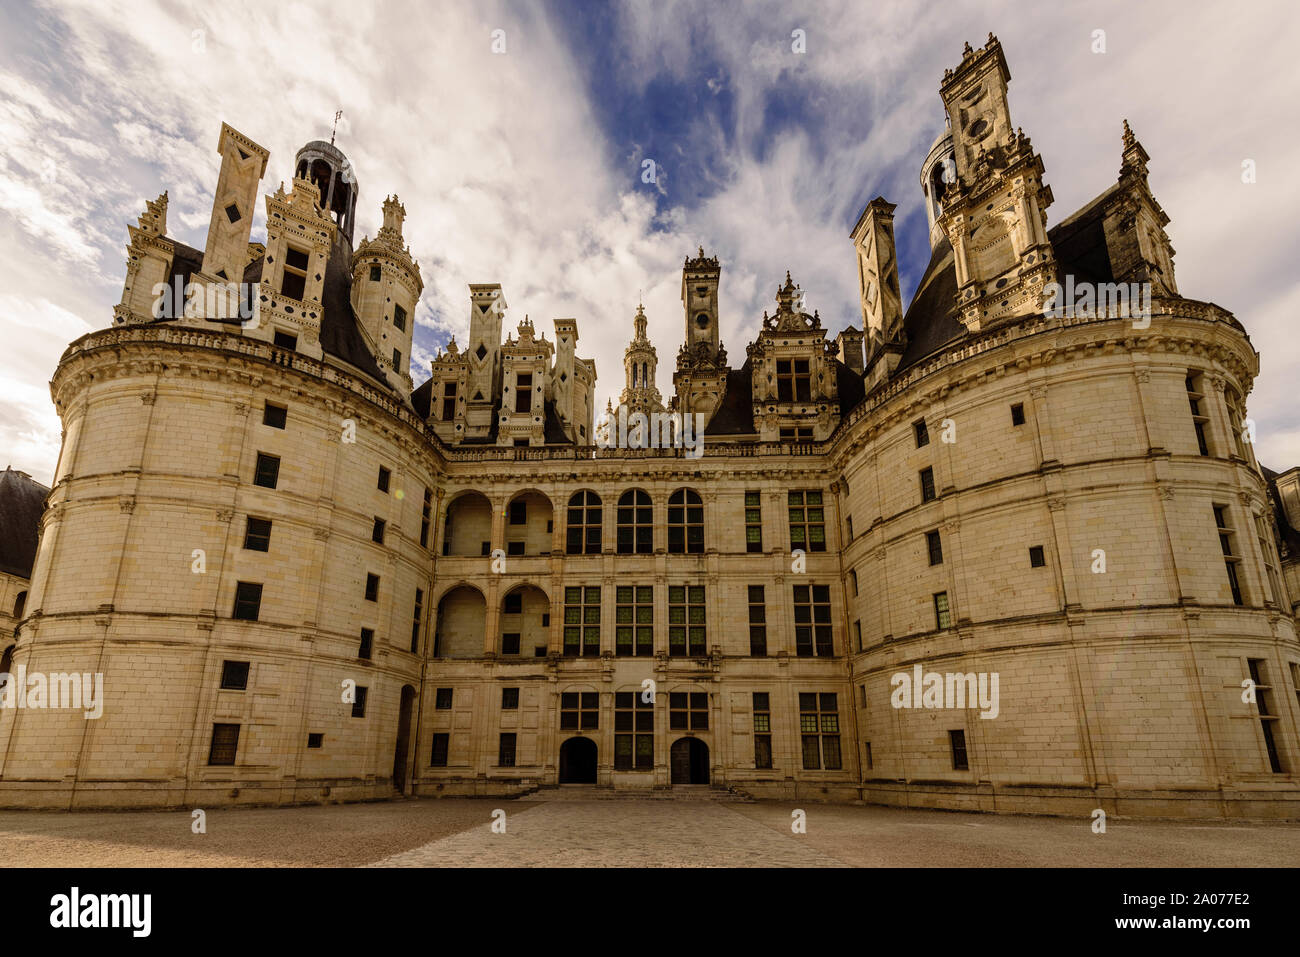 Chambord Castle on the Loire River. France. Stock Photo